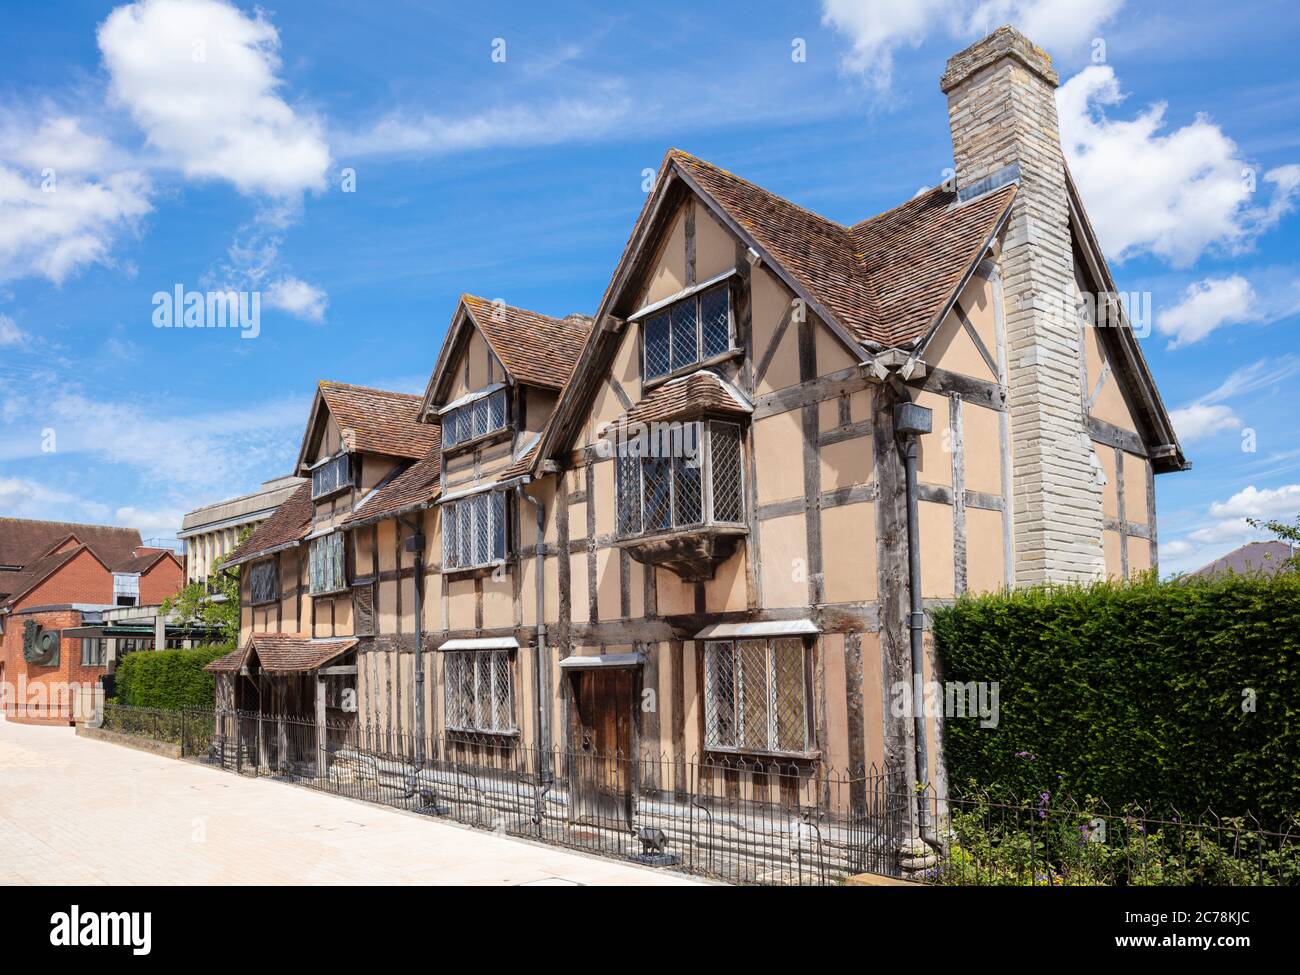 William Shakespeares Geburtsort Stratford-upon-Avon William Shakespeares Geburtsort Stratford-upon-Avon Warwickshire England GB Europa Stockfoto